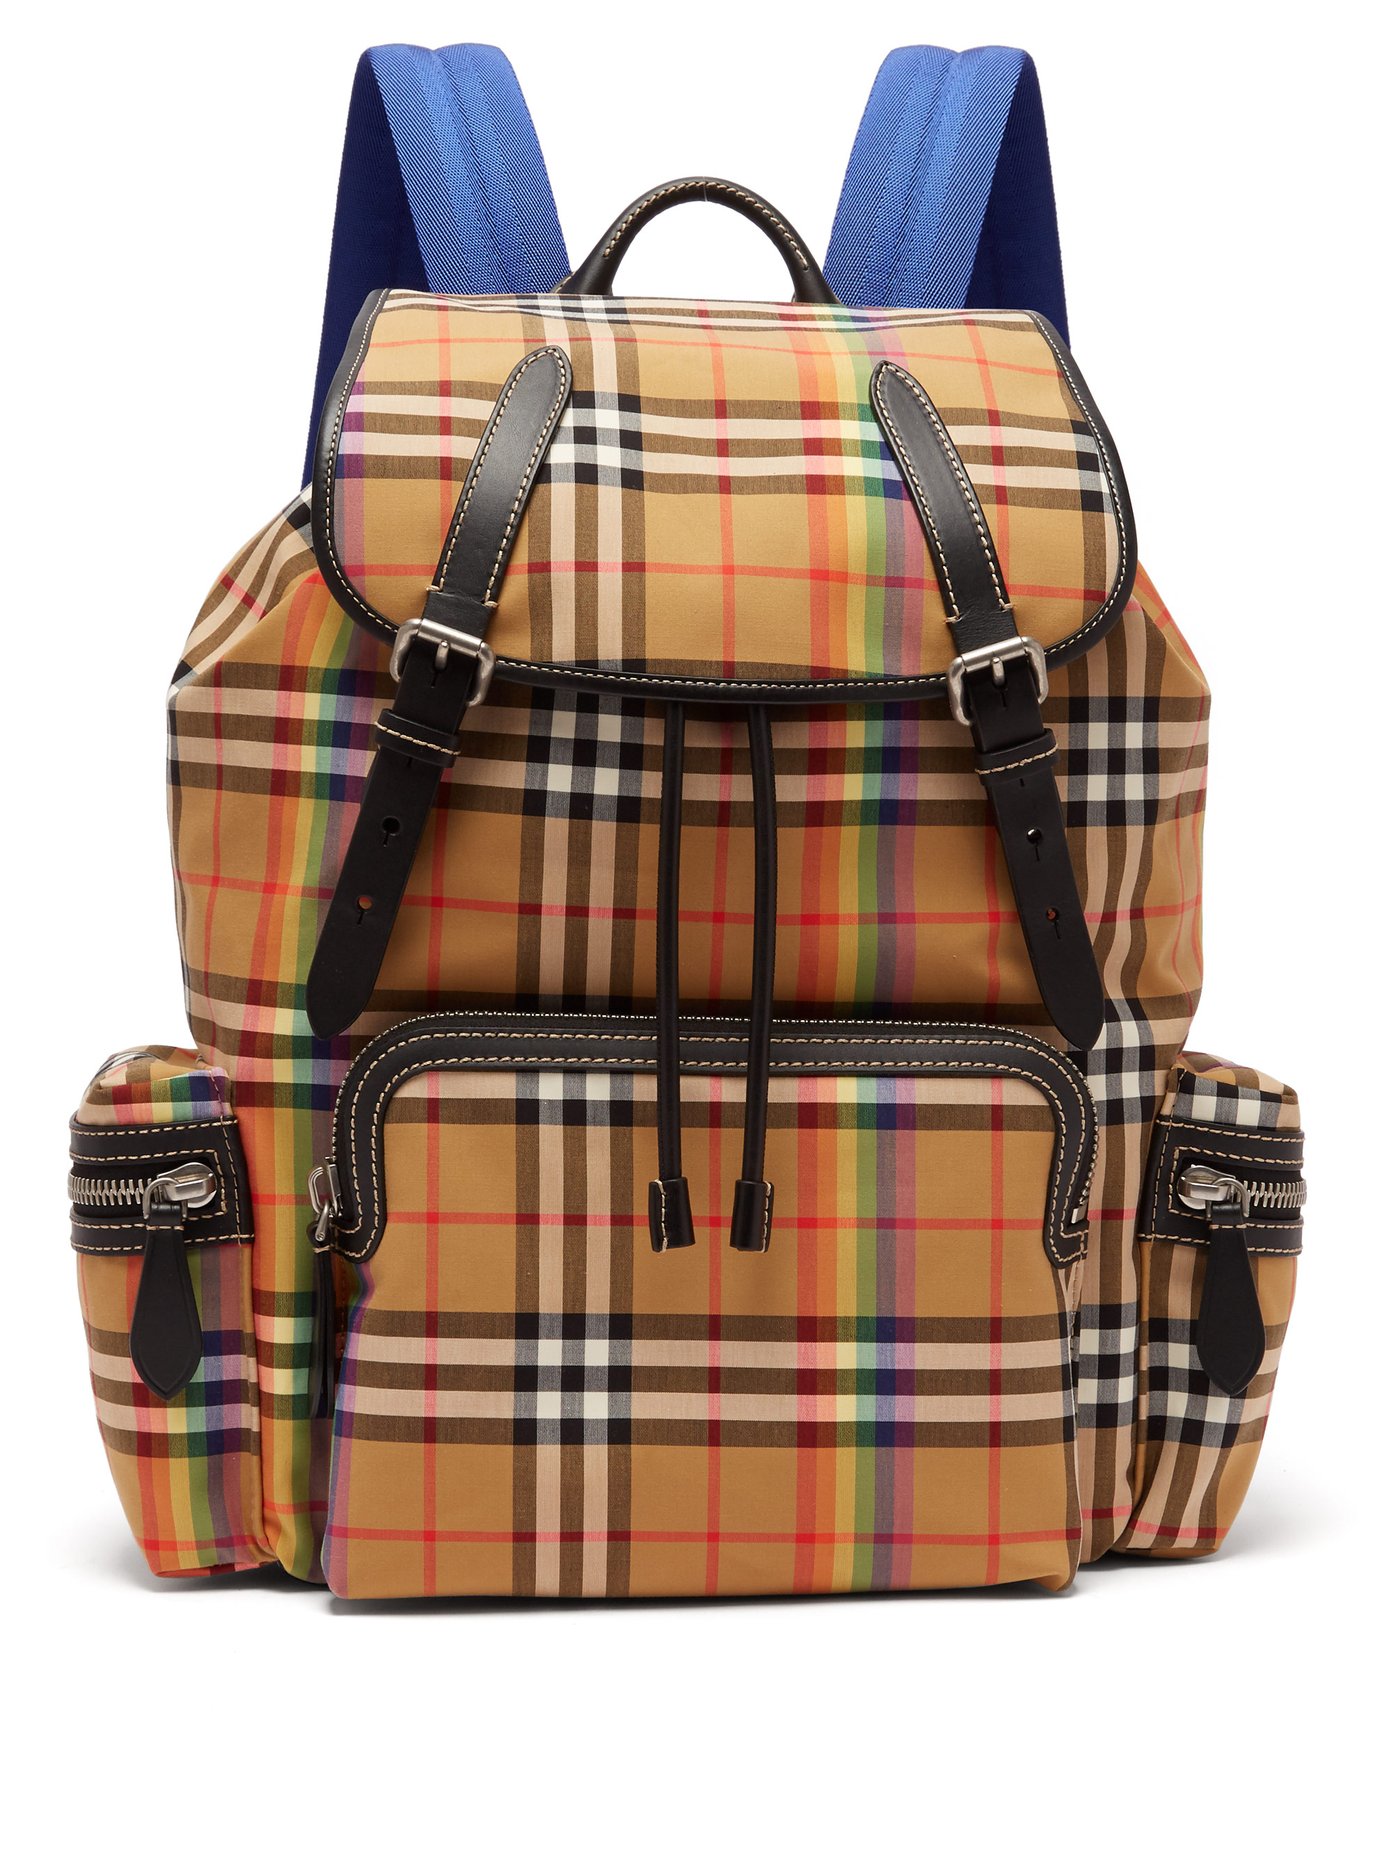 burberry rainbow backpack